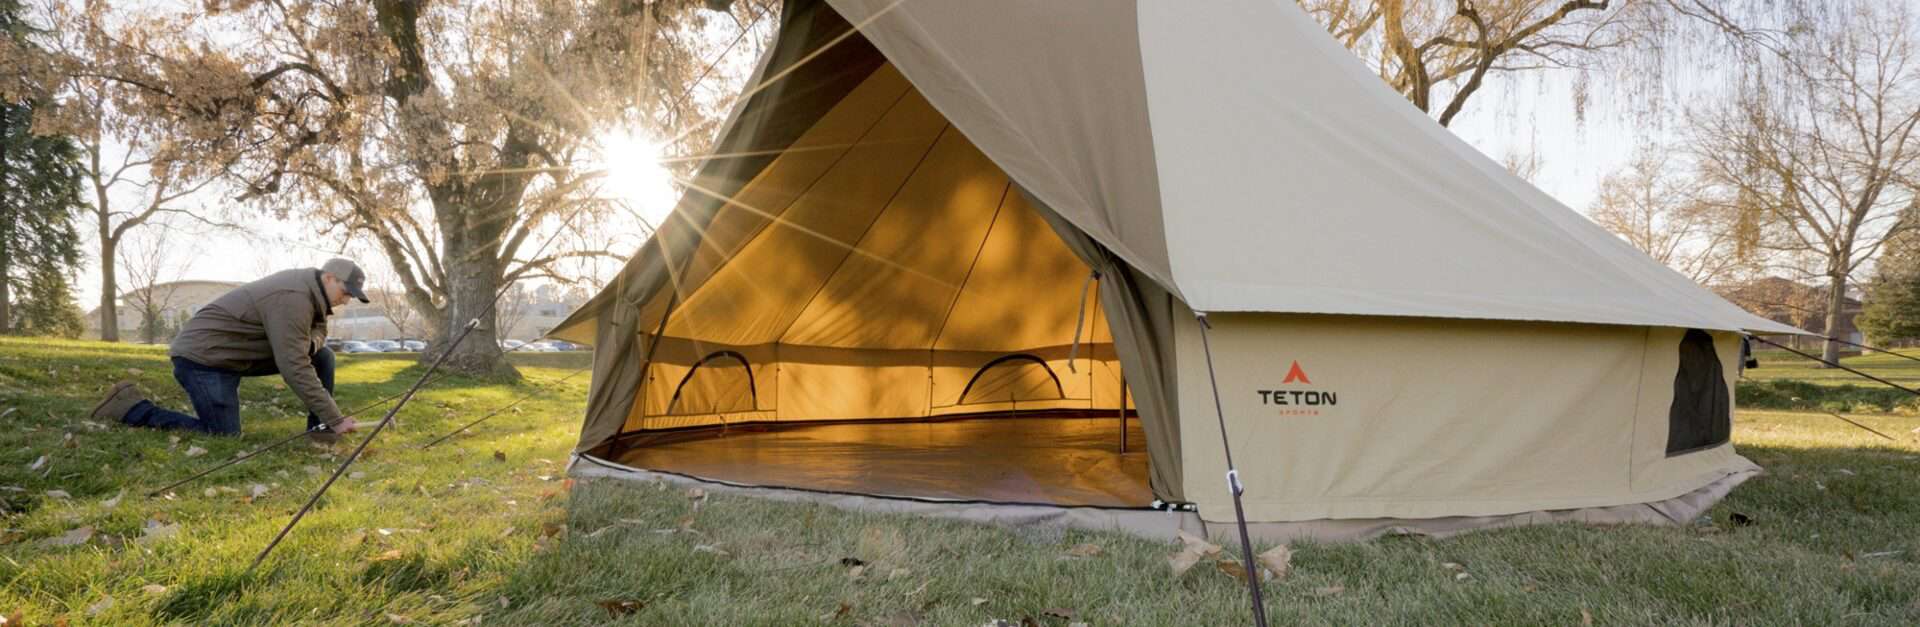 Teton Sports Sierra 10 person canvas camping tent